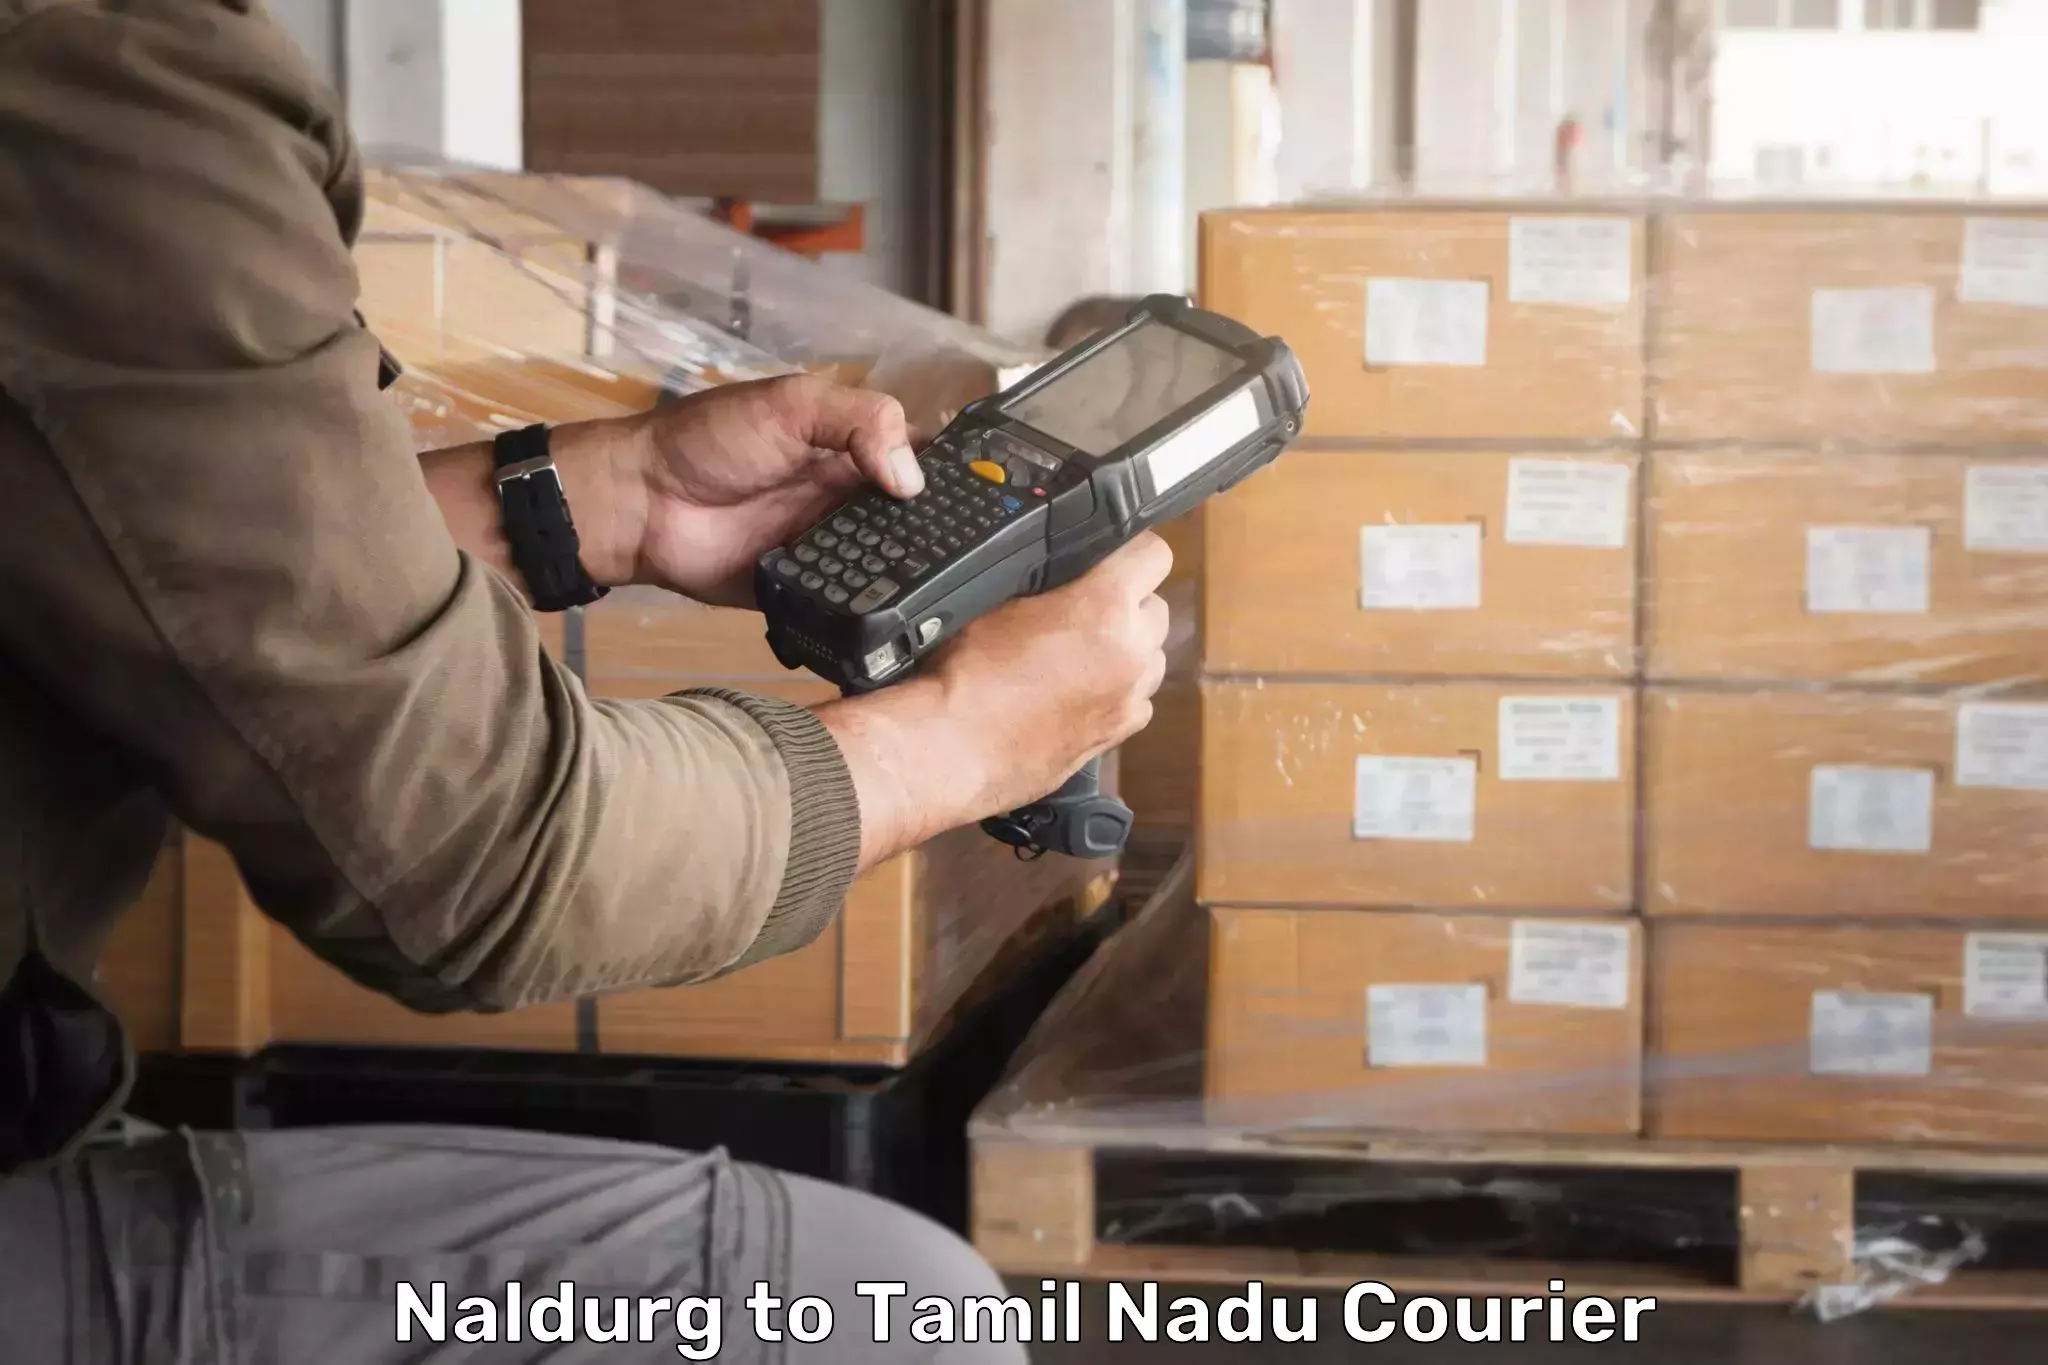 Easy return solutions Naldurg to Avadi